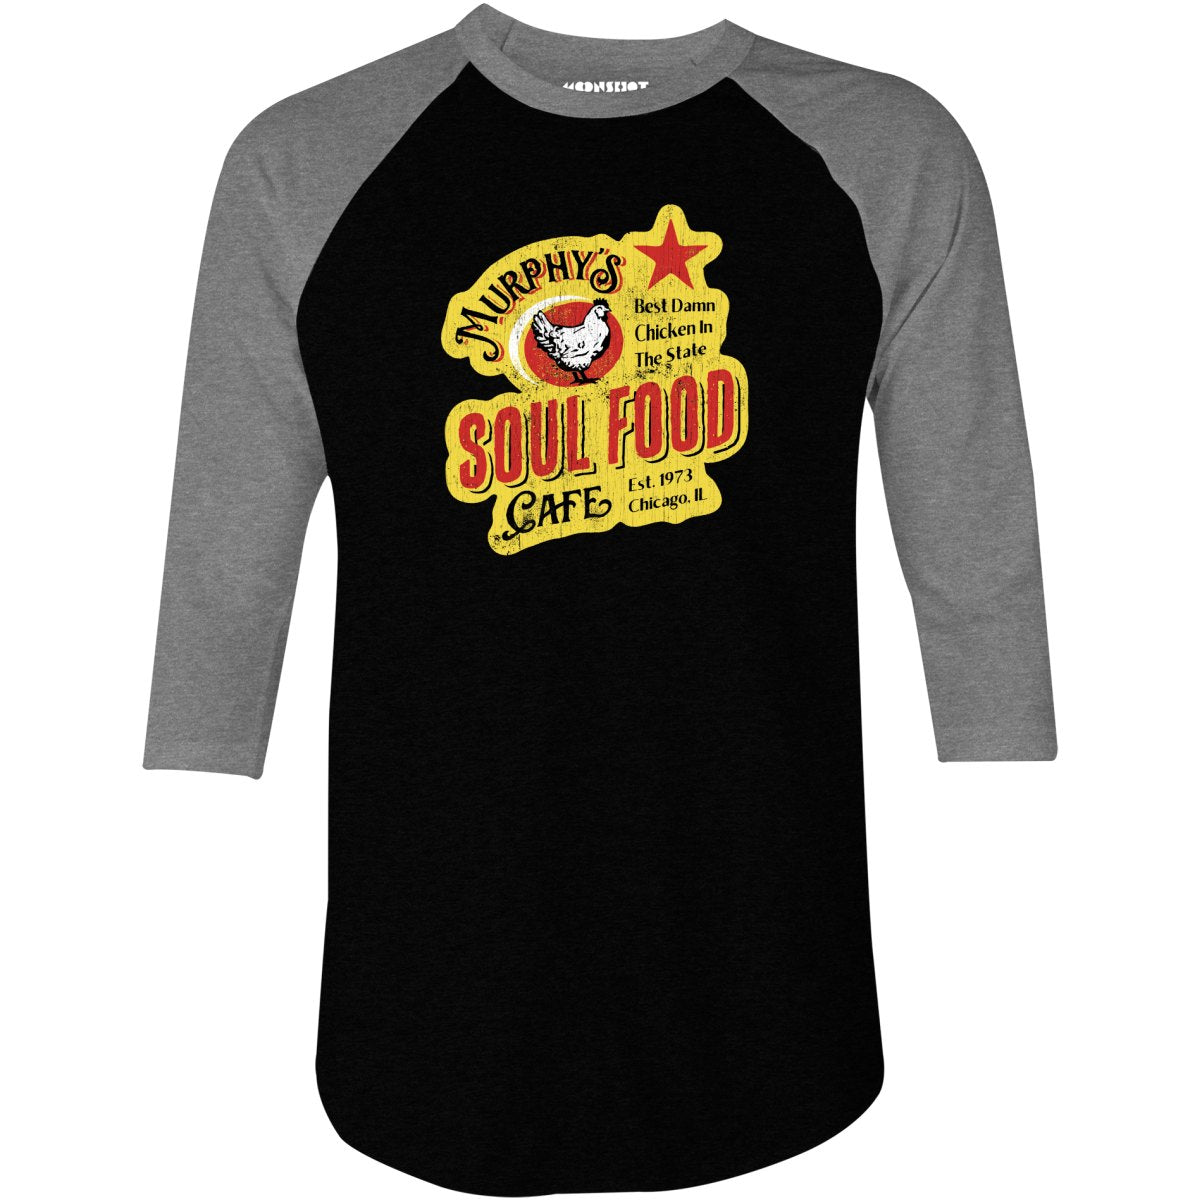 Murphy's Soul Food Cafe - 3/4 Sleeve Raglan T-Shirt